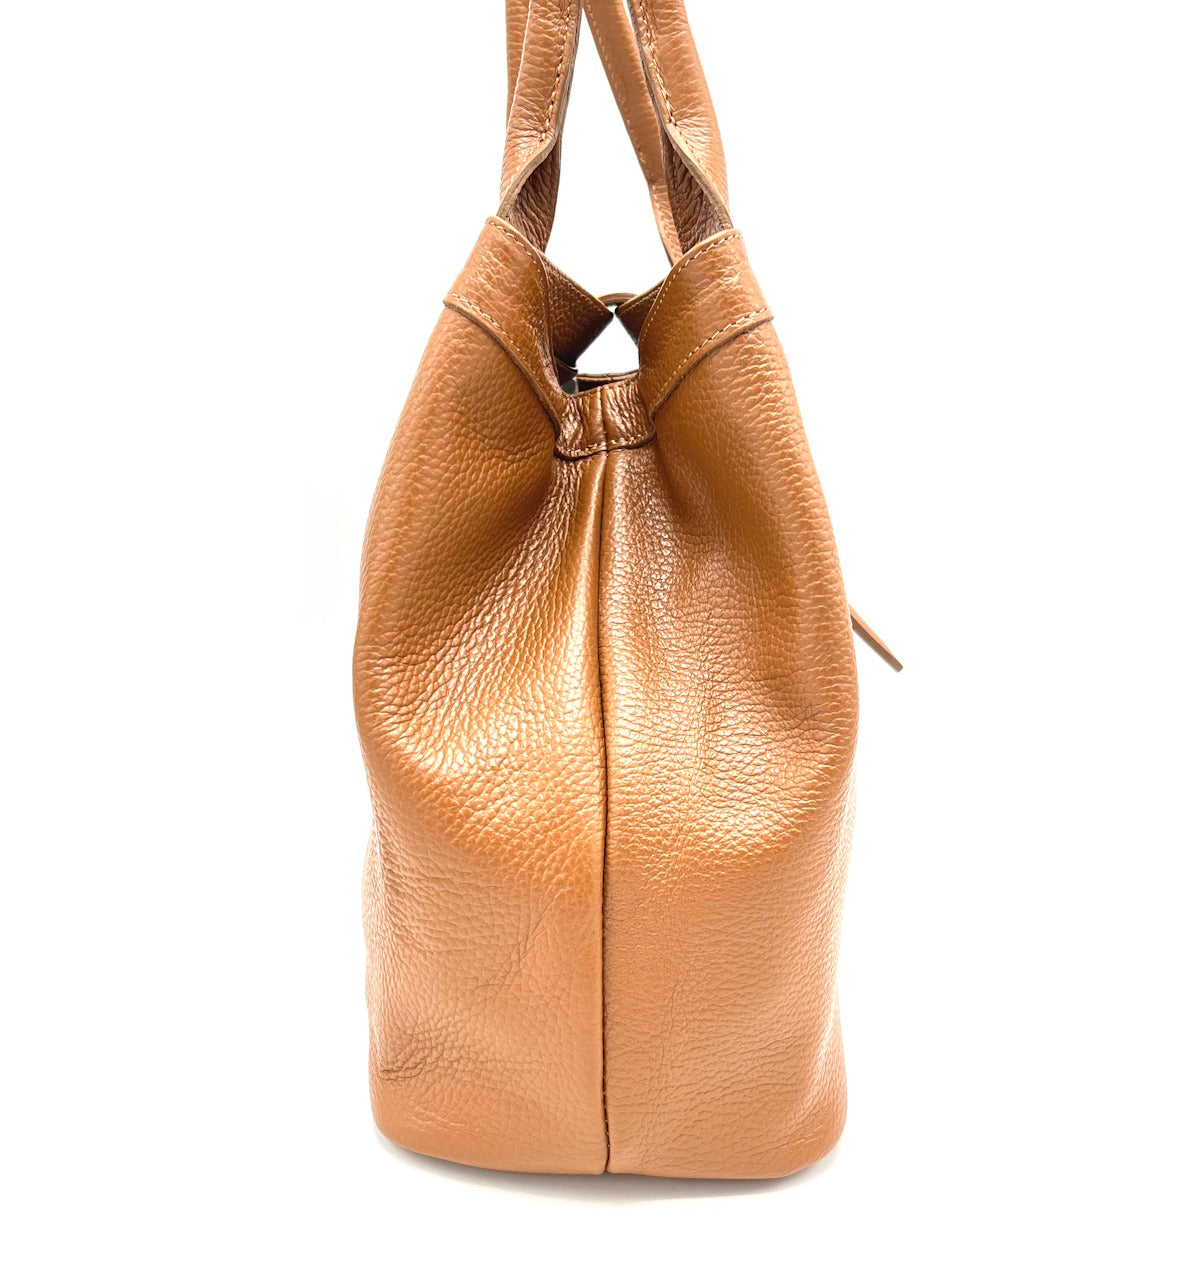 Genuine leather bag Medium, Made in Italy, art. 112461